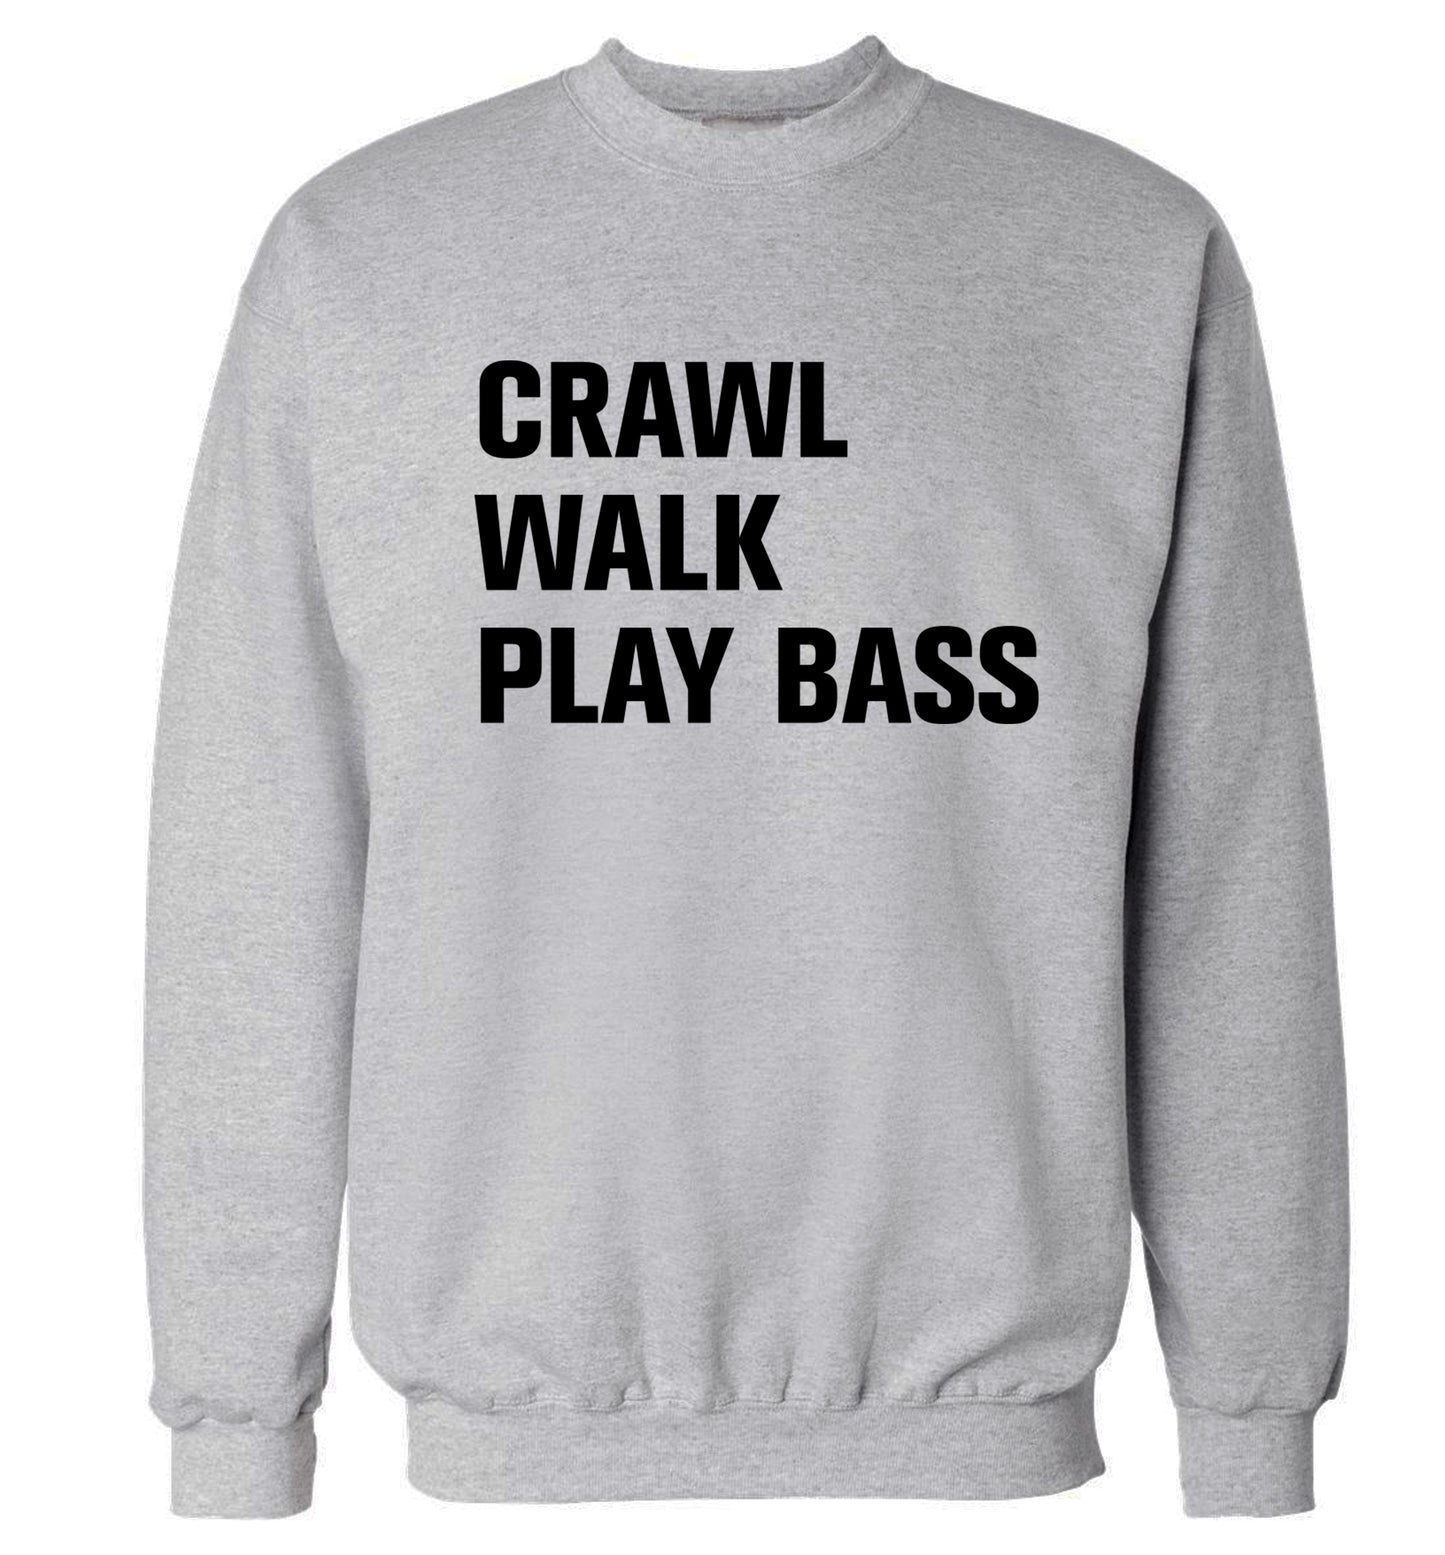 Crawl Walk Play Bass Adult's unisex grey Sweater 2XL